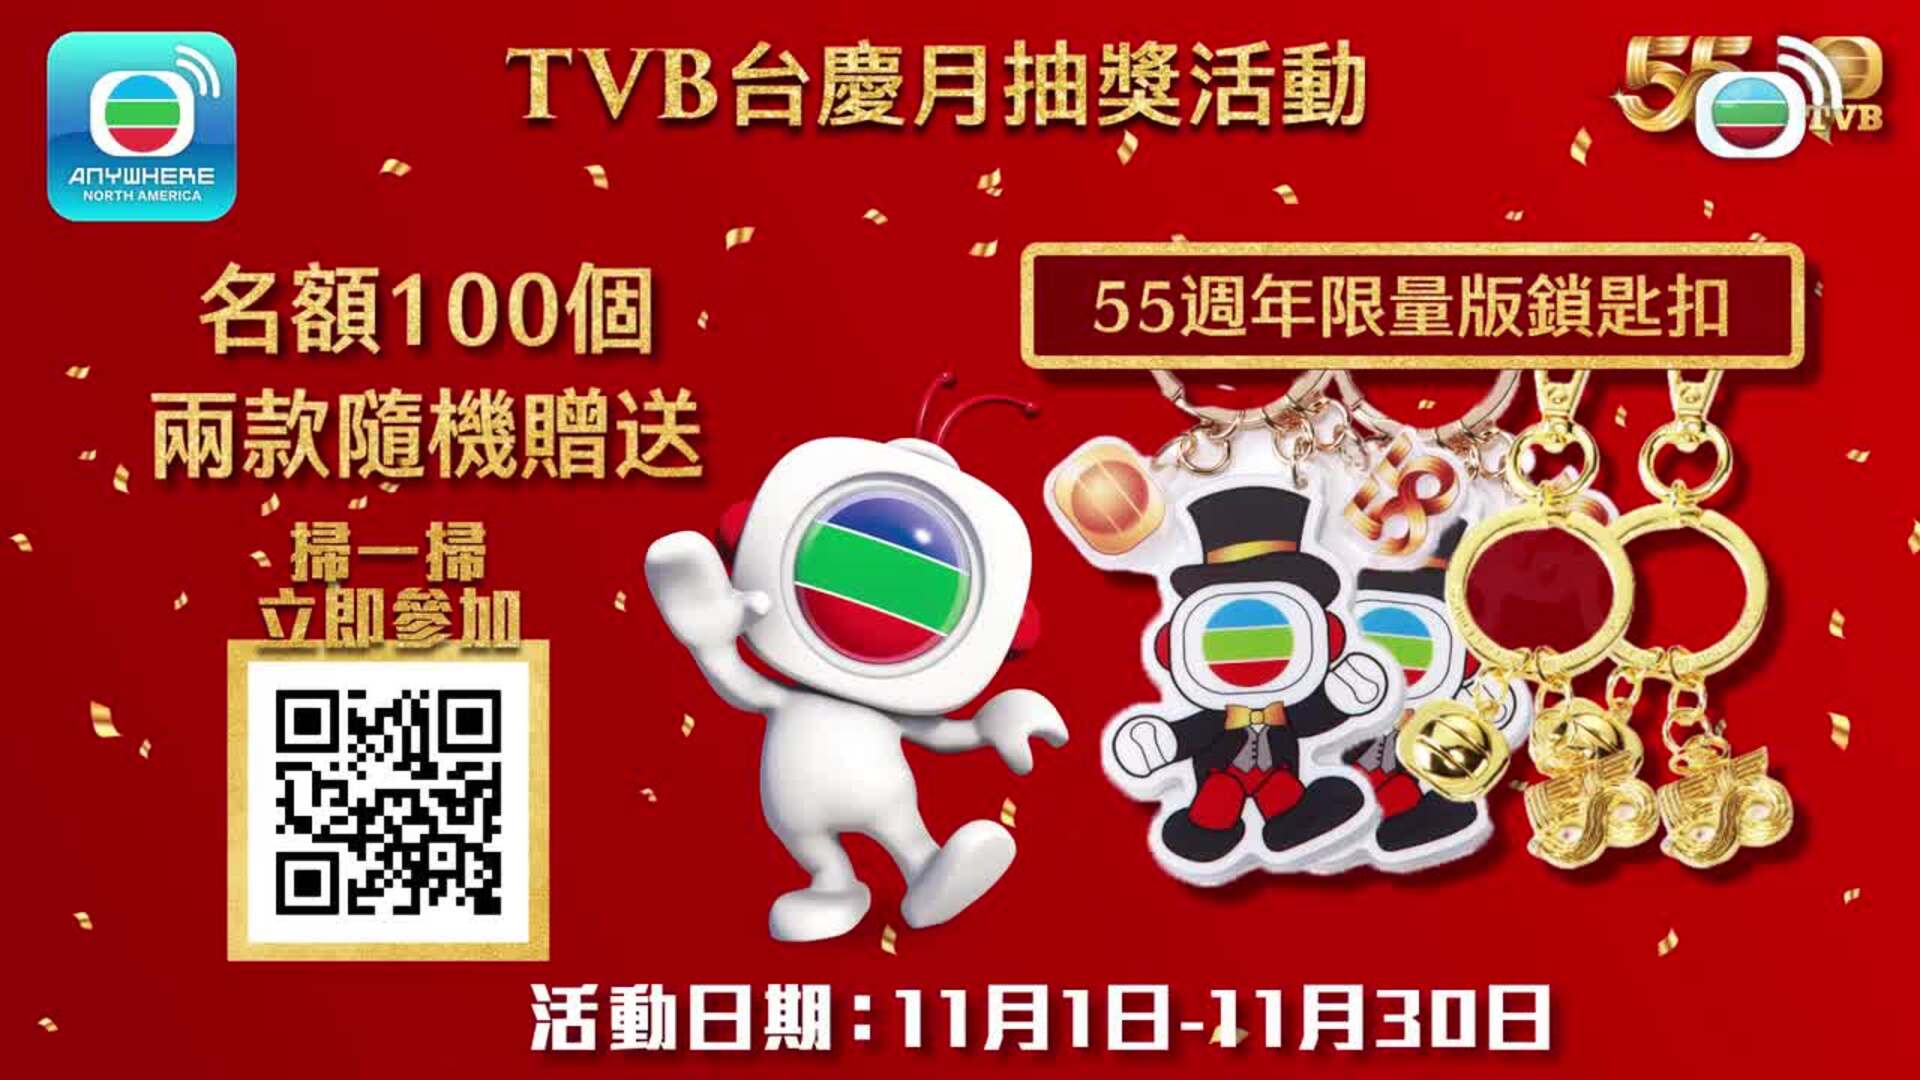 TVB台慶月抽獎活動-TVB 55th Anniversary Lucky Draw